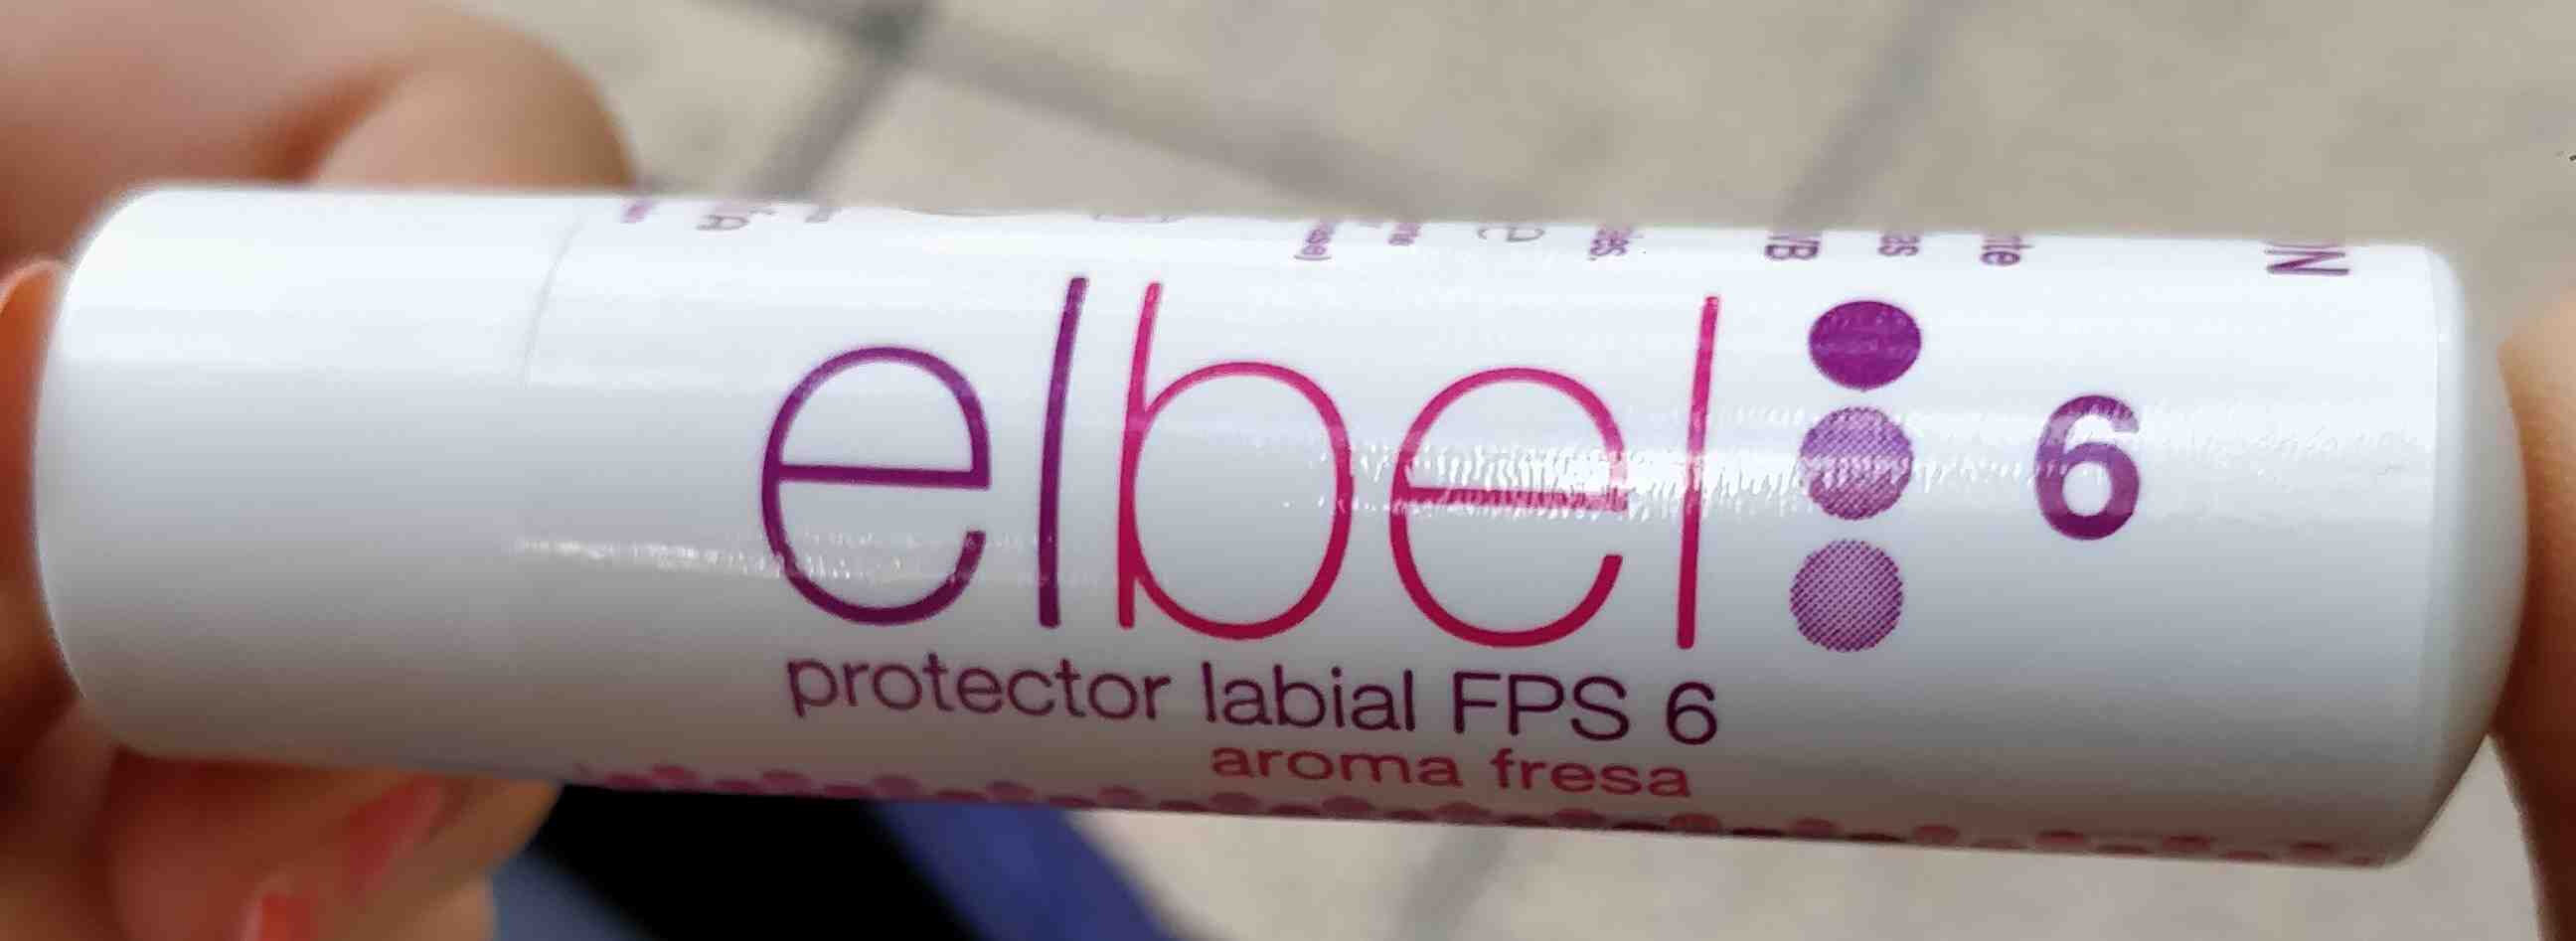 Protector labial FPS 6 aroma fresa - Produto - en